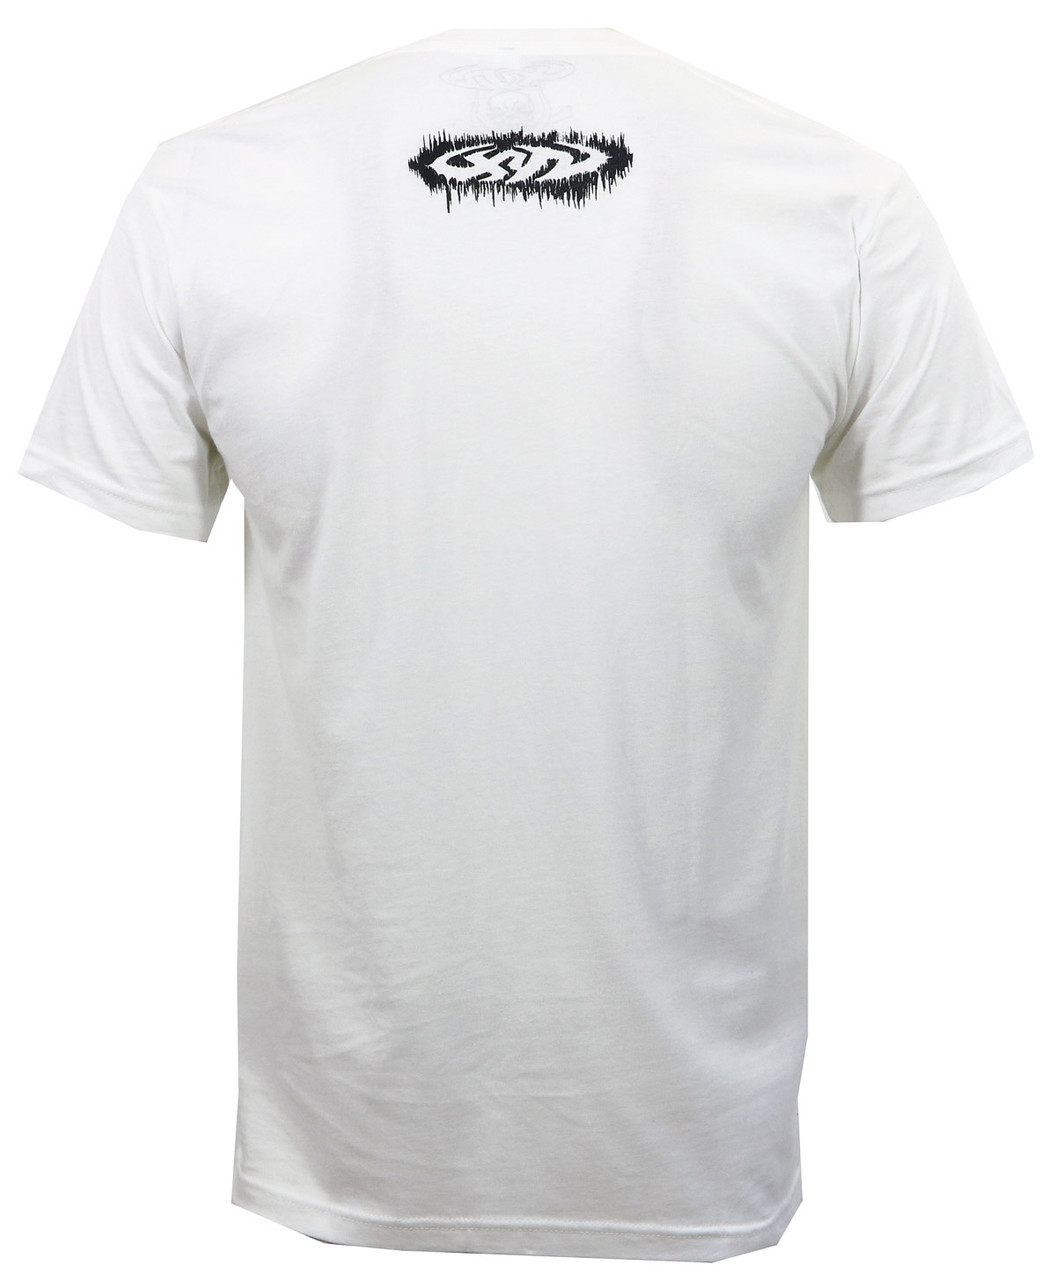 Xyz Clothing Pentagon Logo White T Shirt Merch2rock Alternative Clothing